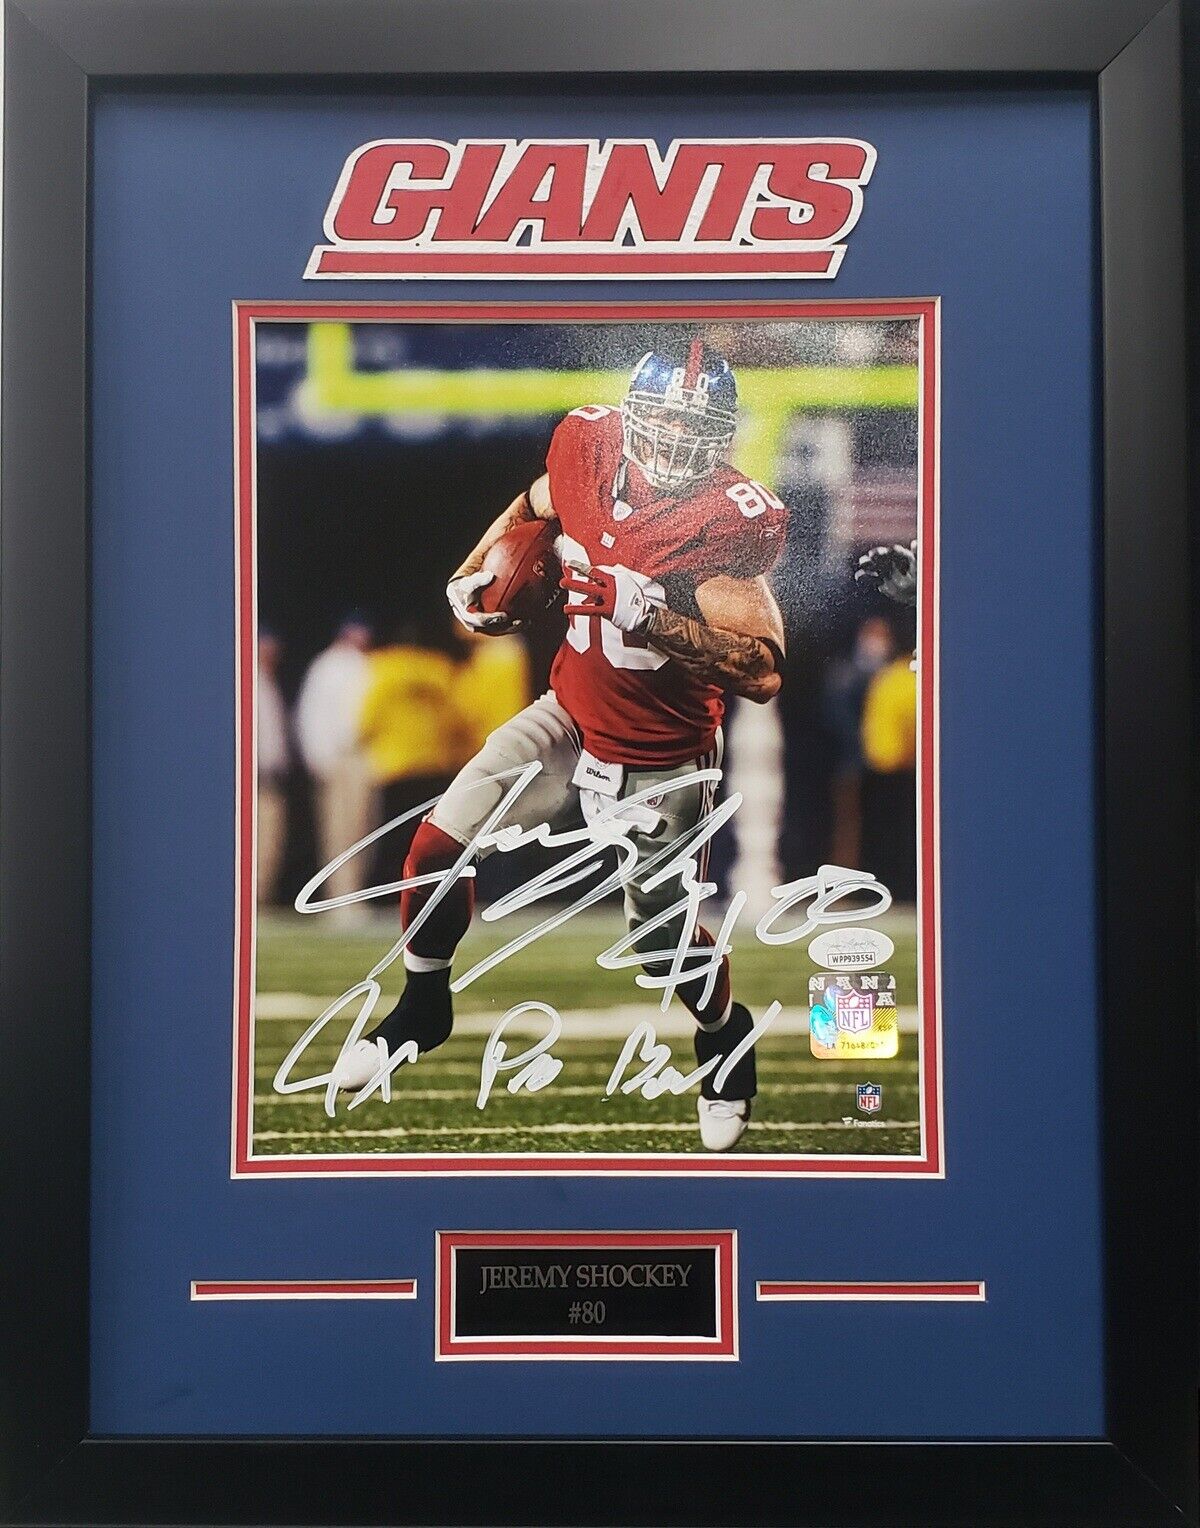 Jeremy Shockey autograph signed inscribed 8x10 Photo Poster painting framed New York Giants PSA